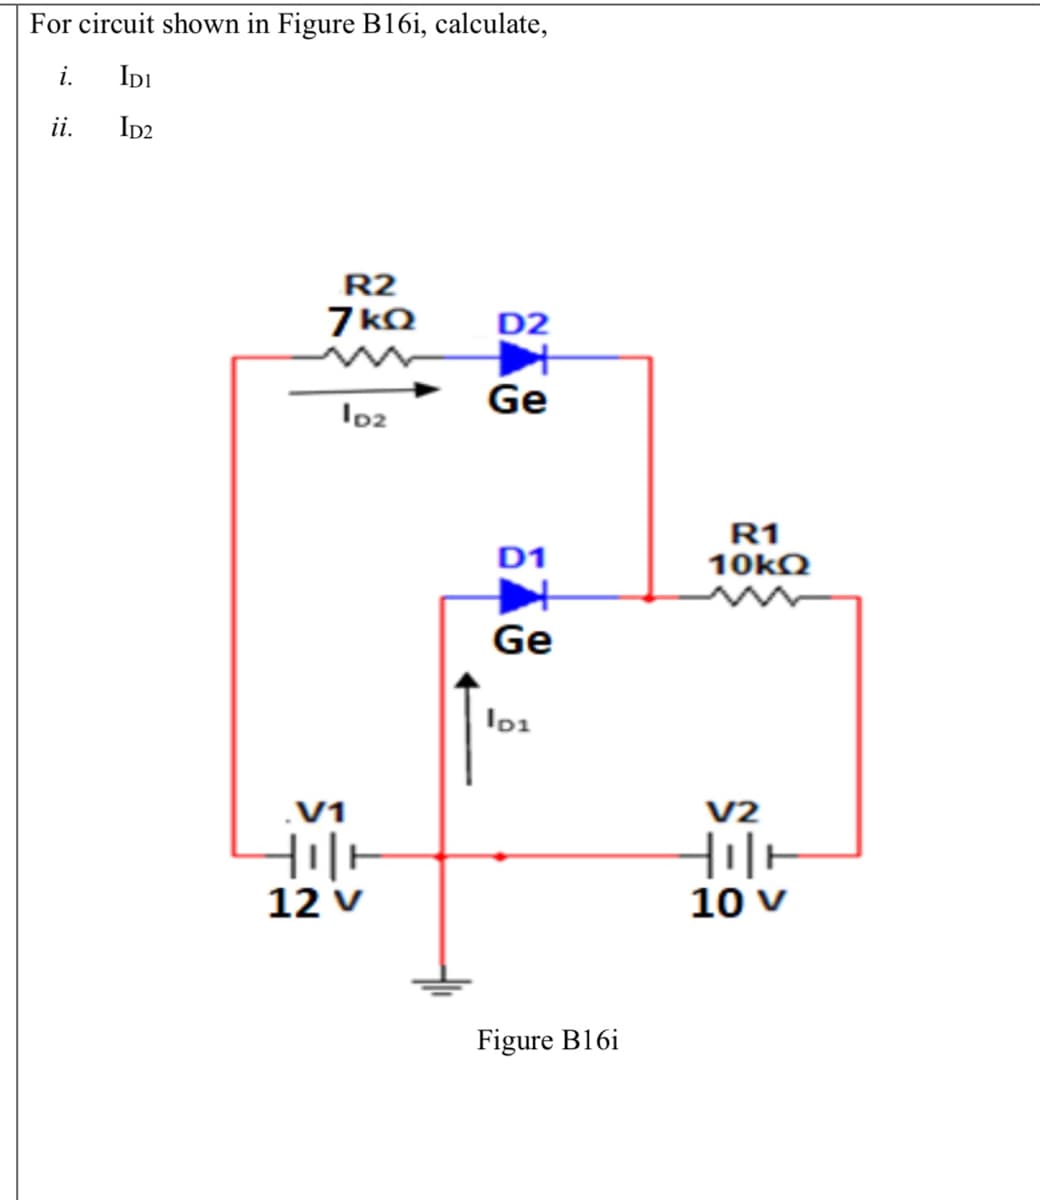 For circuit shown in Figure B16i, calculate,
i.
IDI
ii.
ID2
R2
7 kQ
D2
Ge
Io2
R1
10KQ
D1
Ge
lo1
.V1
V2
12 v
10 v
Figure B16i
